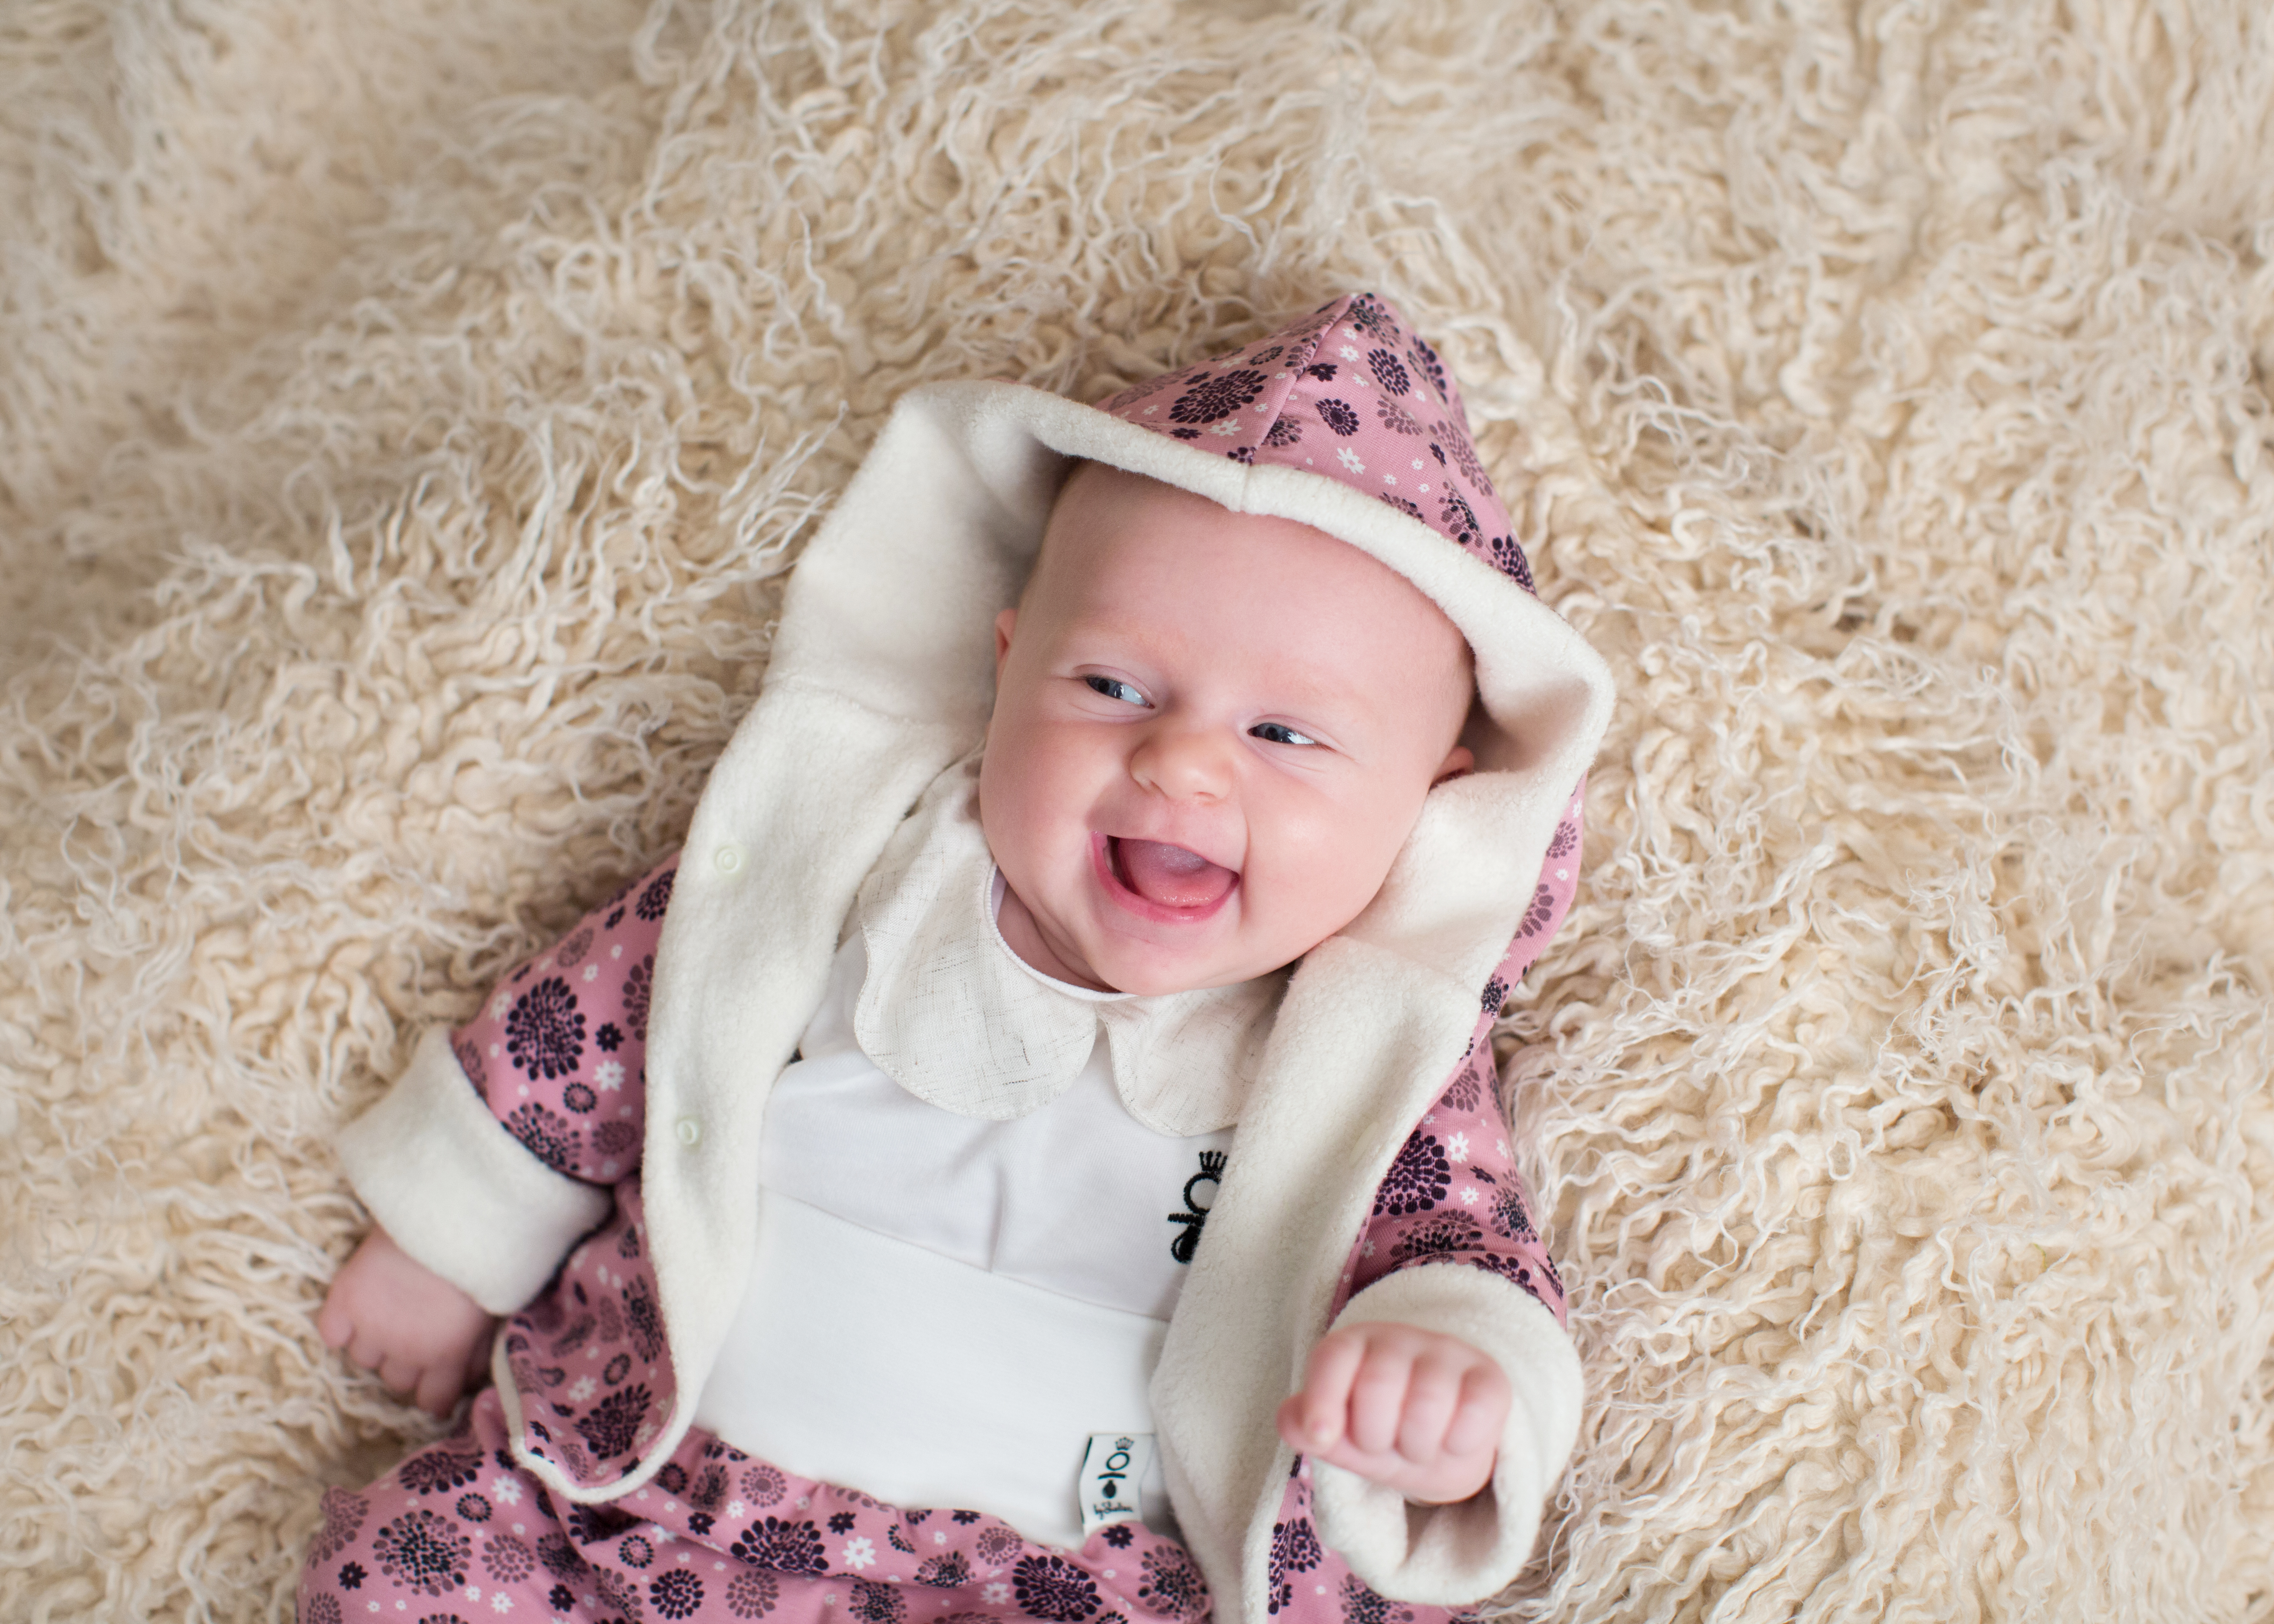 Baby Jacke Übergangsjacke Uni Rose Gefüttert 50-68 Softshell Jacke Sharlene Babymode Winterjacke Handgemacht in Deutschland 